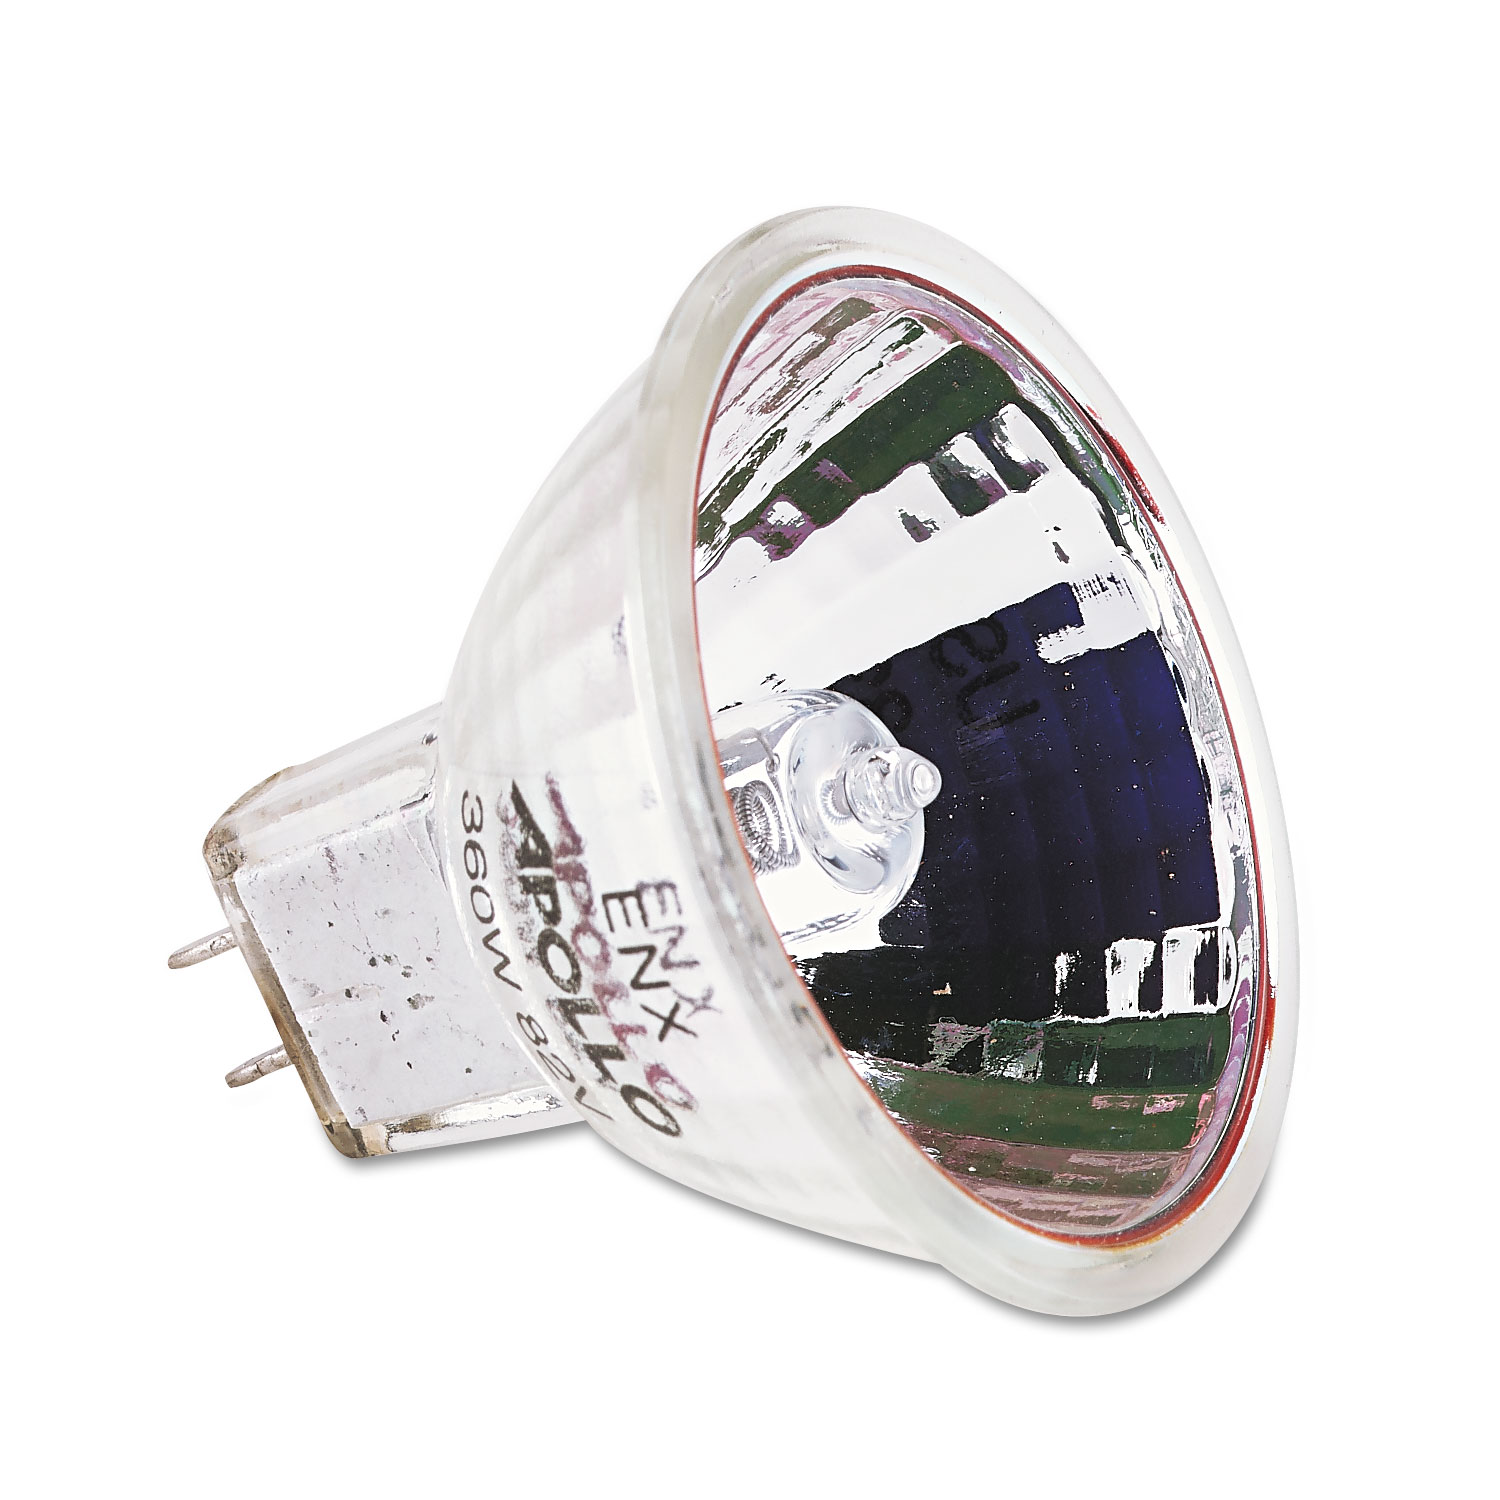 360 Watt Overhead Projector Lamp, 82 Volt, 99% Quartz Glass